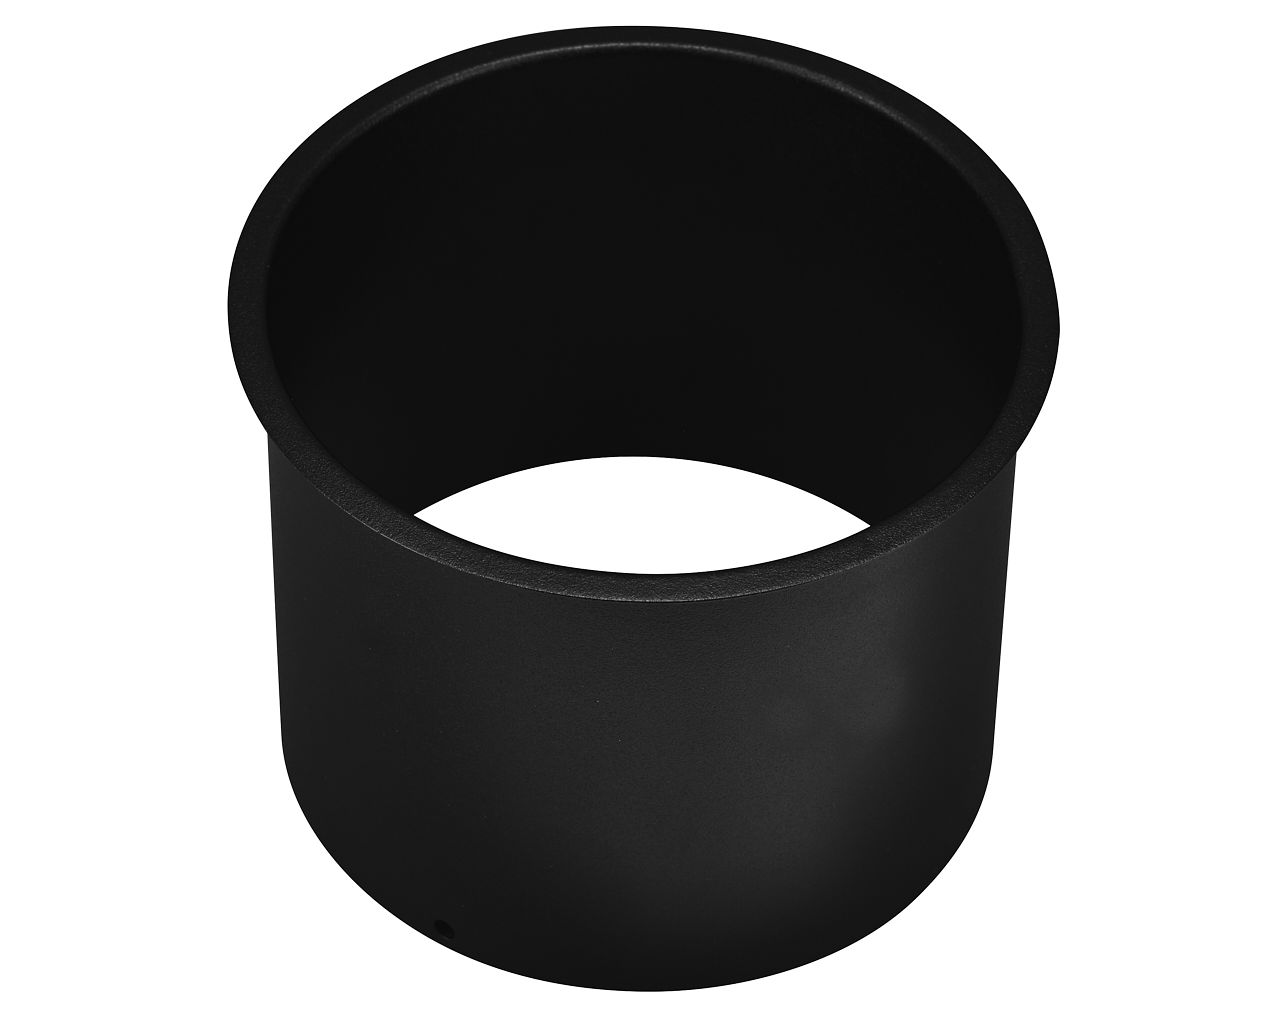 MERIDA STELLA BLACK LINE round countertop ring for a waste bin